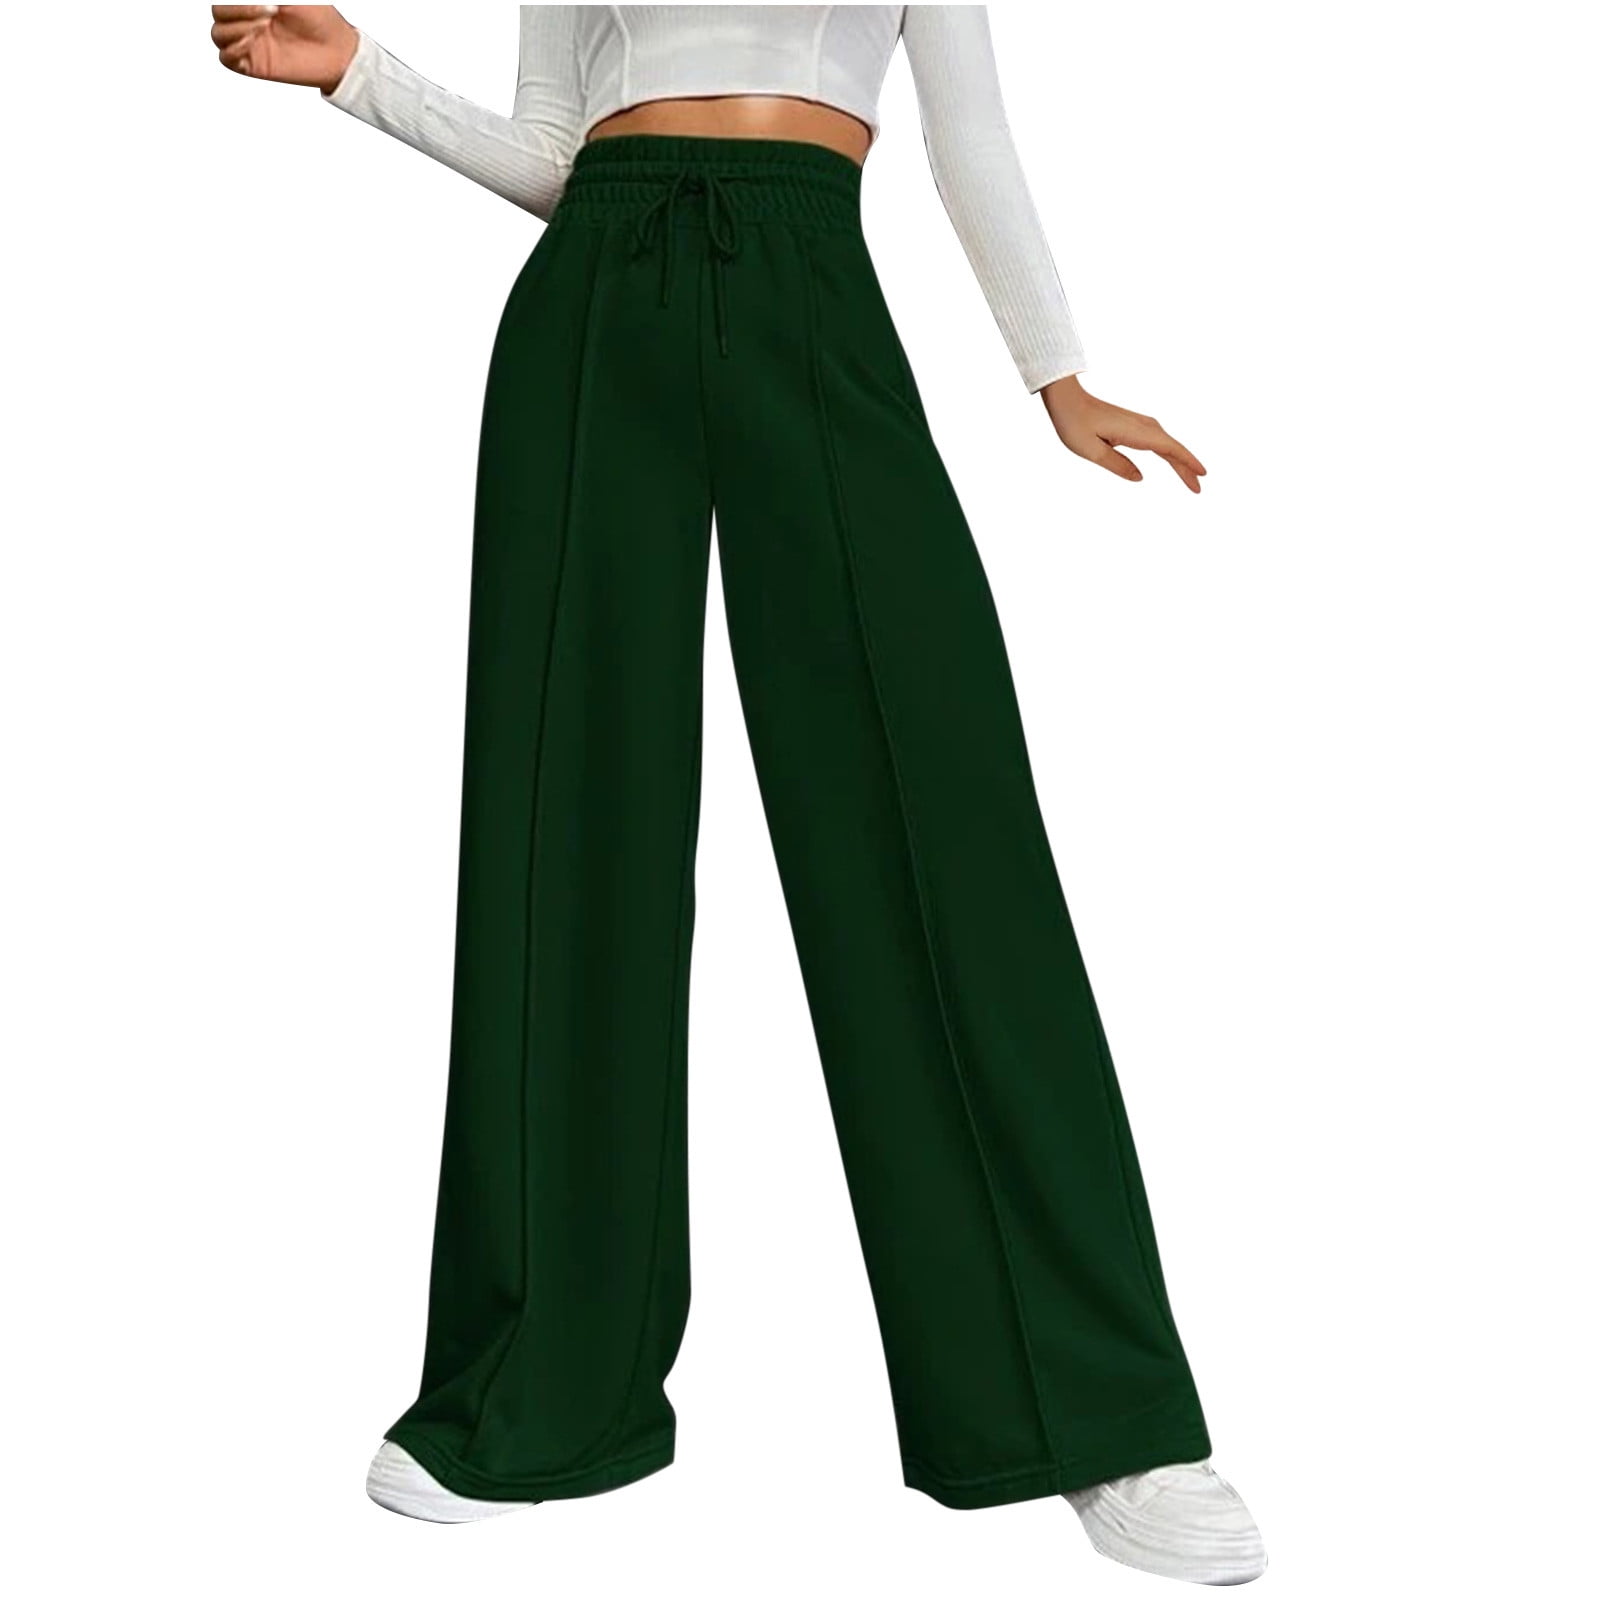 Oalirro Dress Pants for Women High Waisted Wide Leg Dress Pants for Women  Fall and Winter Fashion Casual Slacks Green M